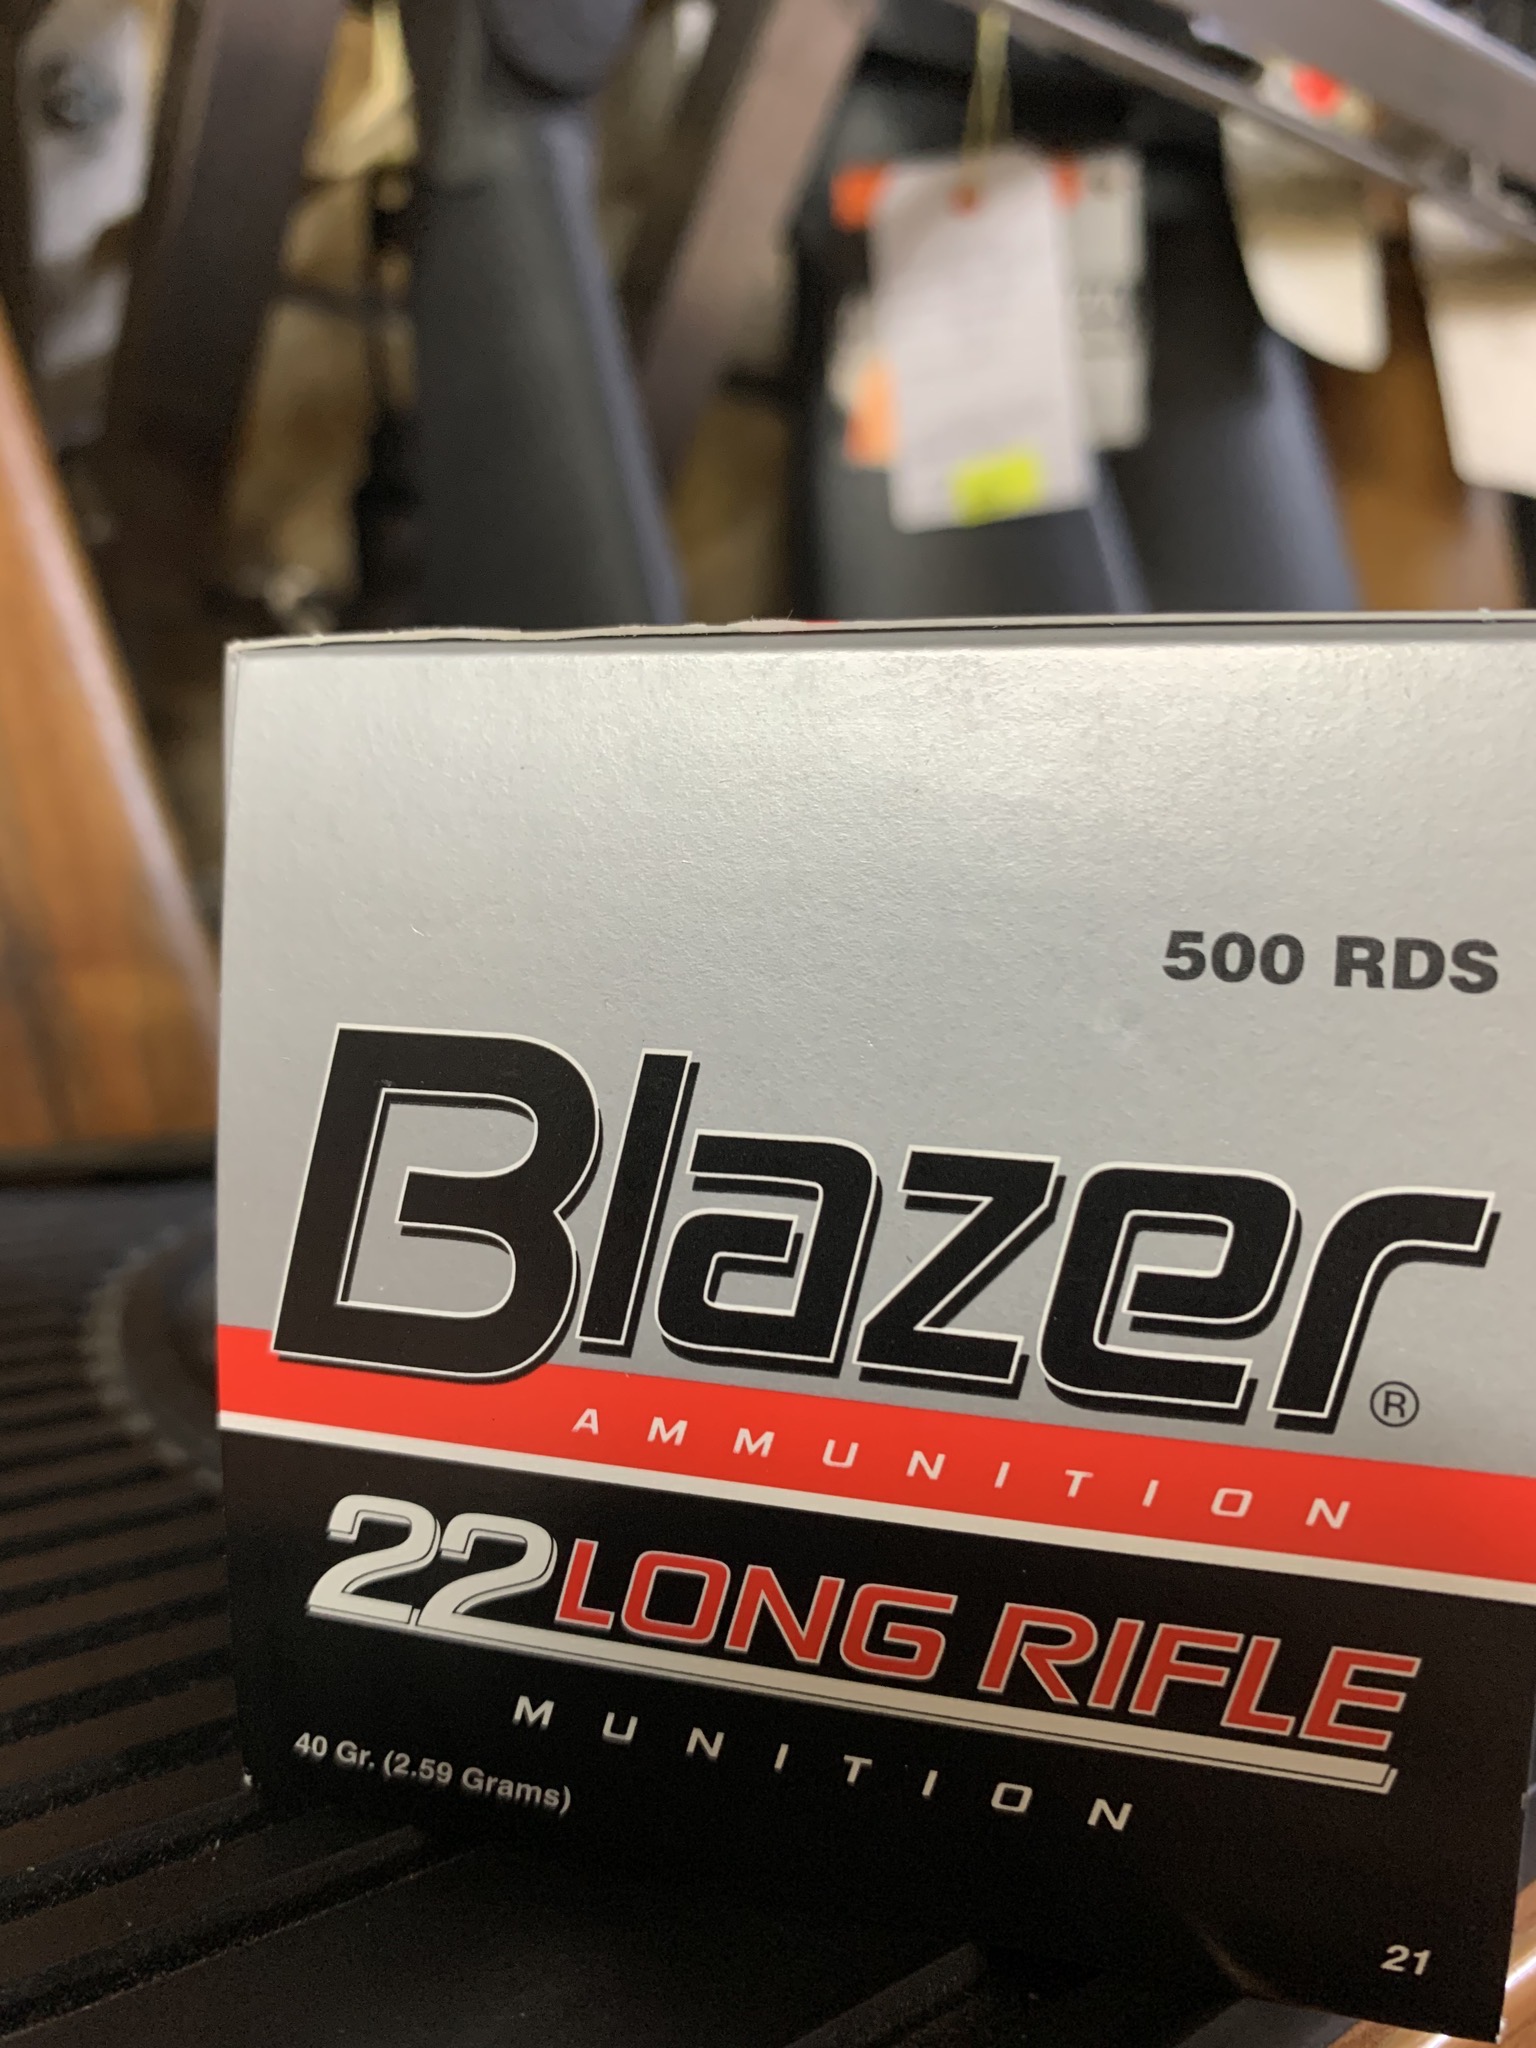 Blazer 22 LR bulk pack ammunition (500 rounds)